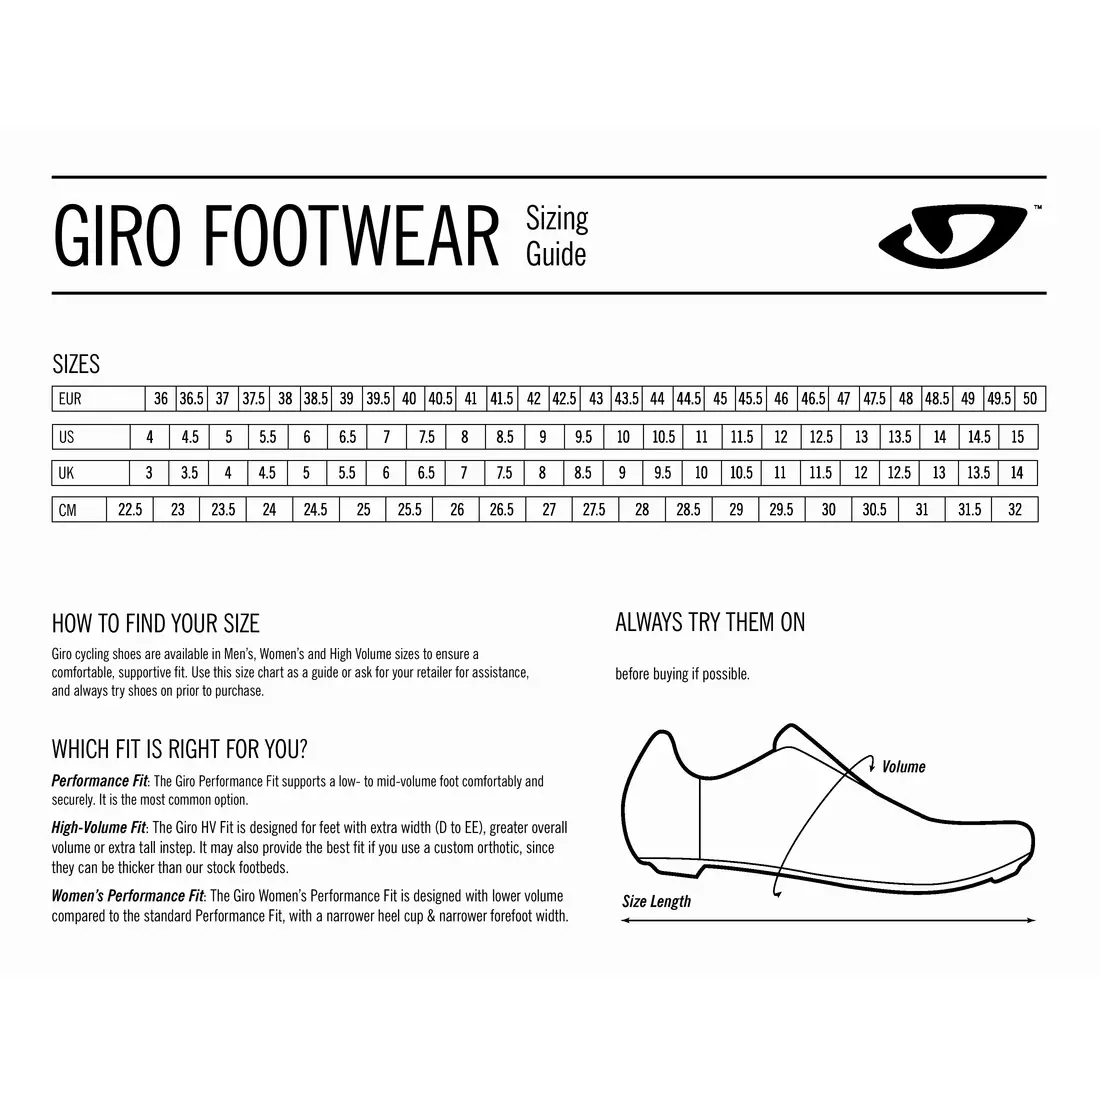 GIRO TECHNE - férfi kerékpáros cipő white/black